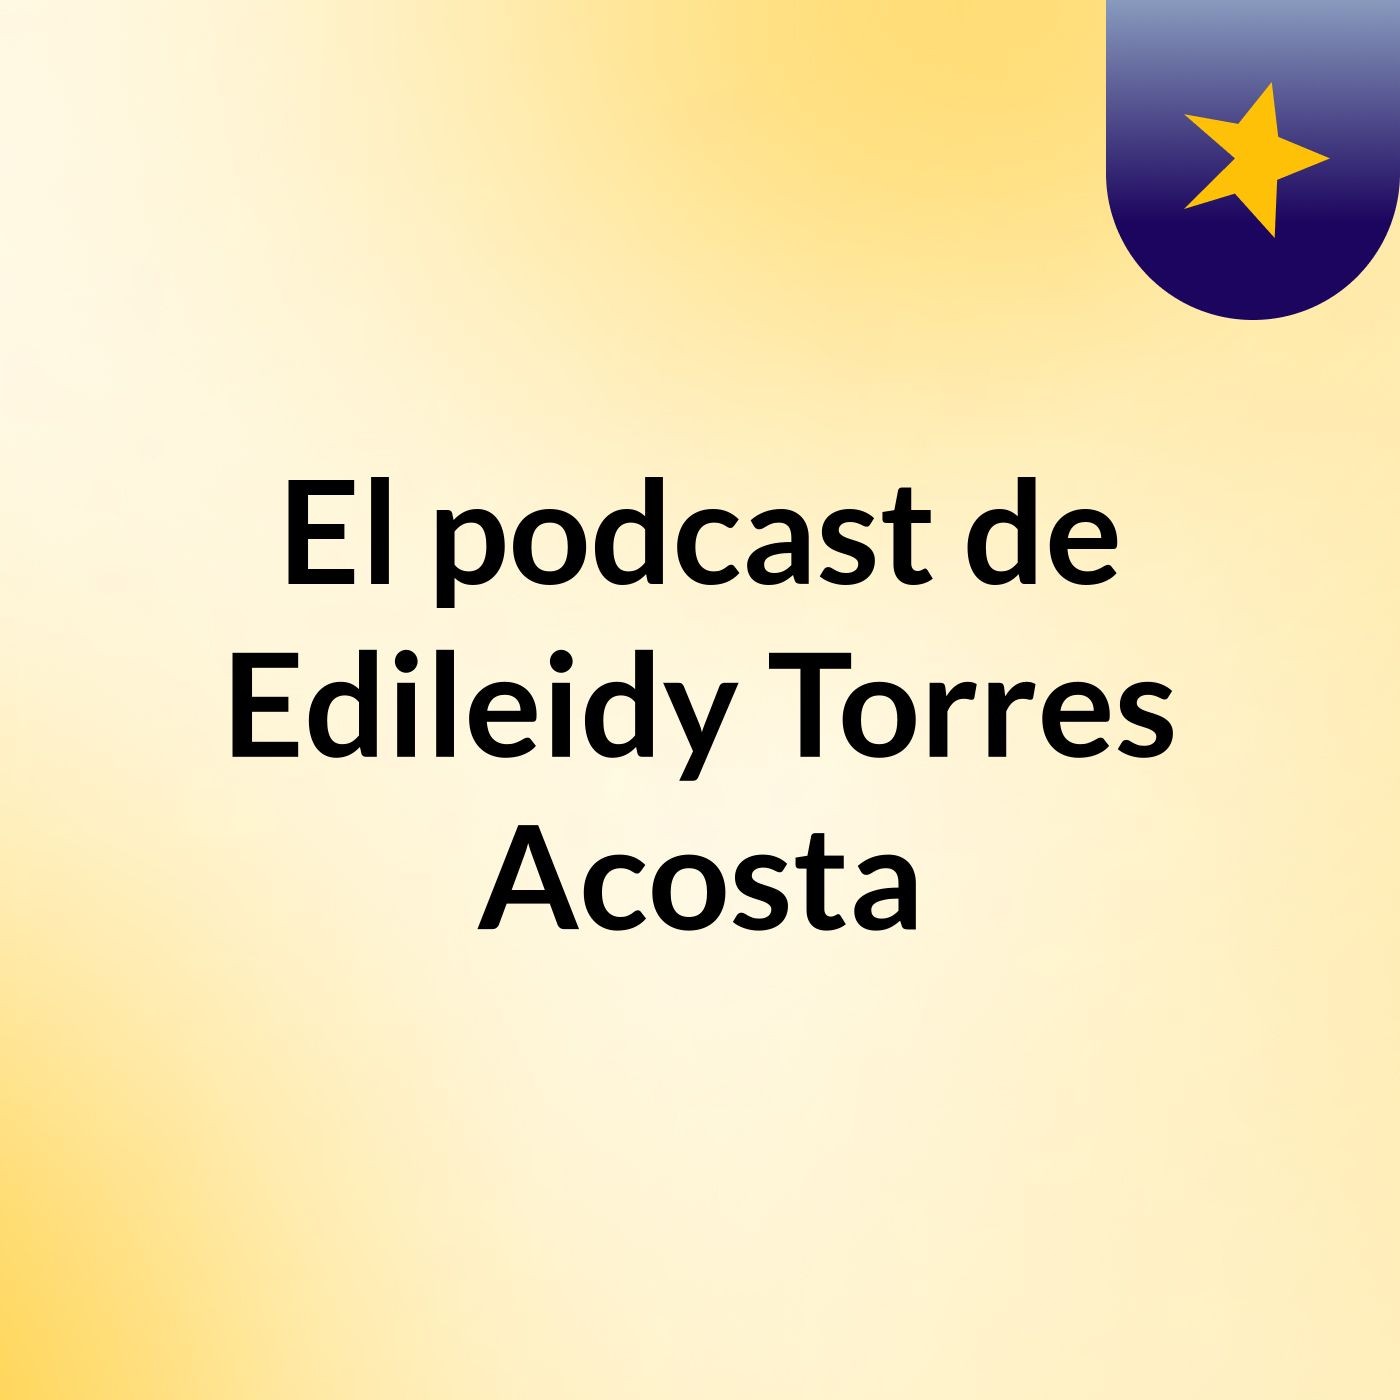 El podcast de Edileidy Torres Acosta